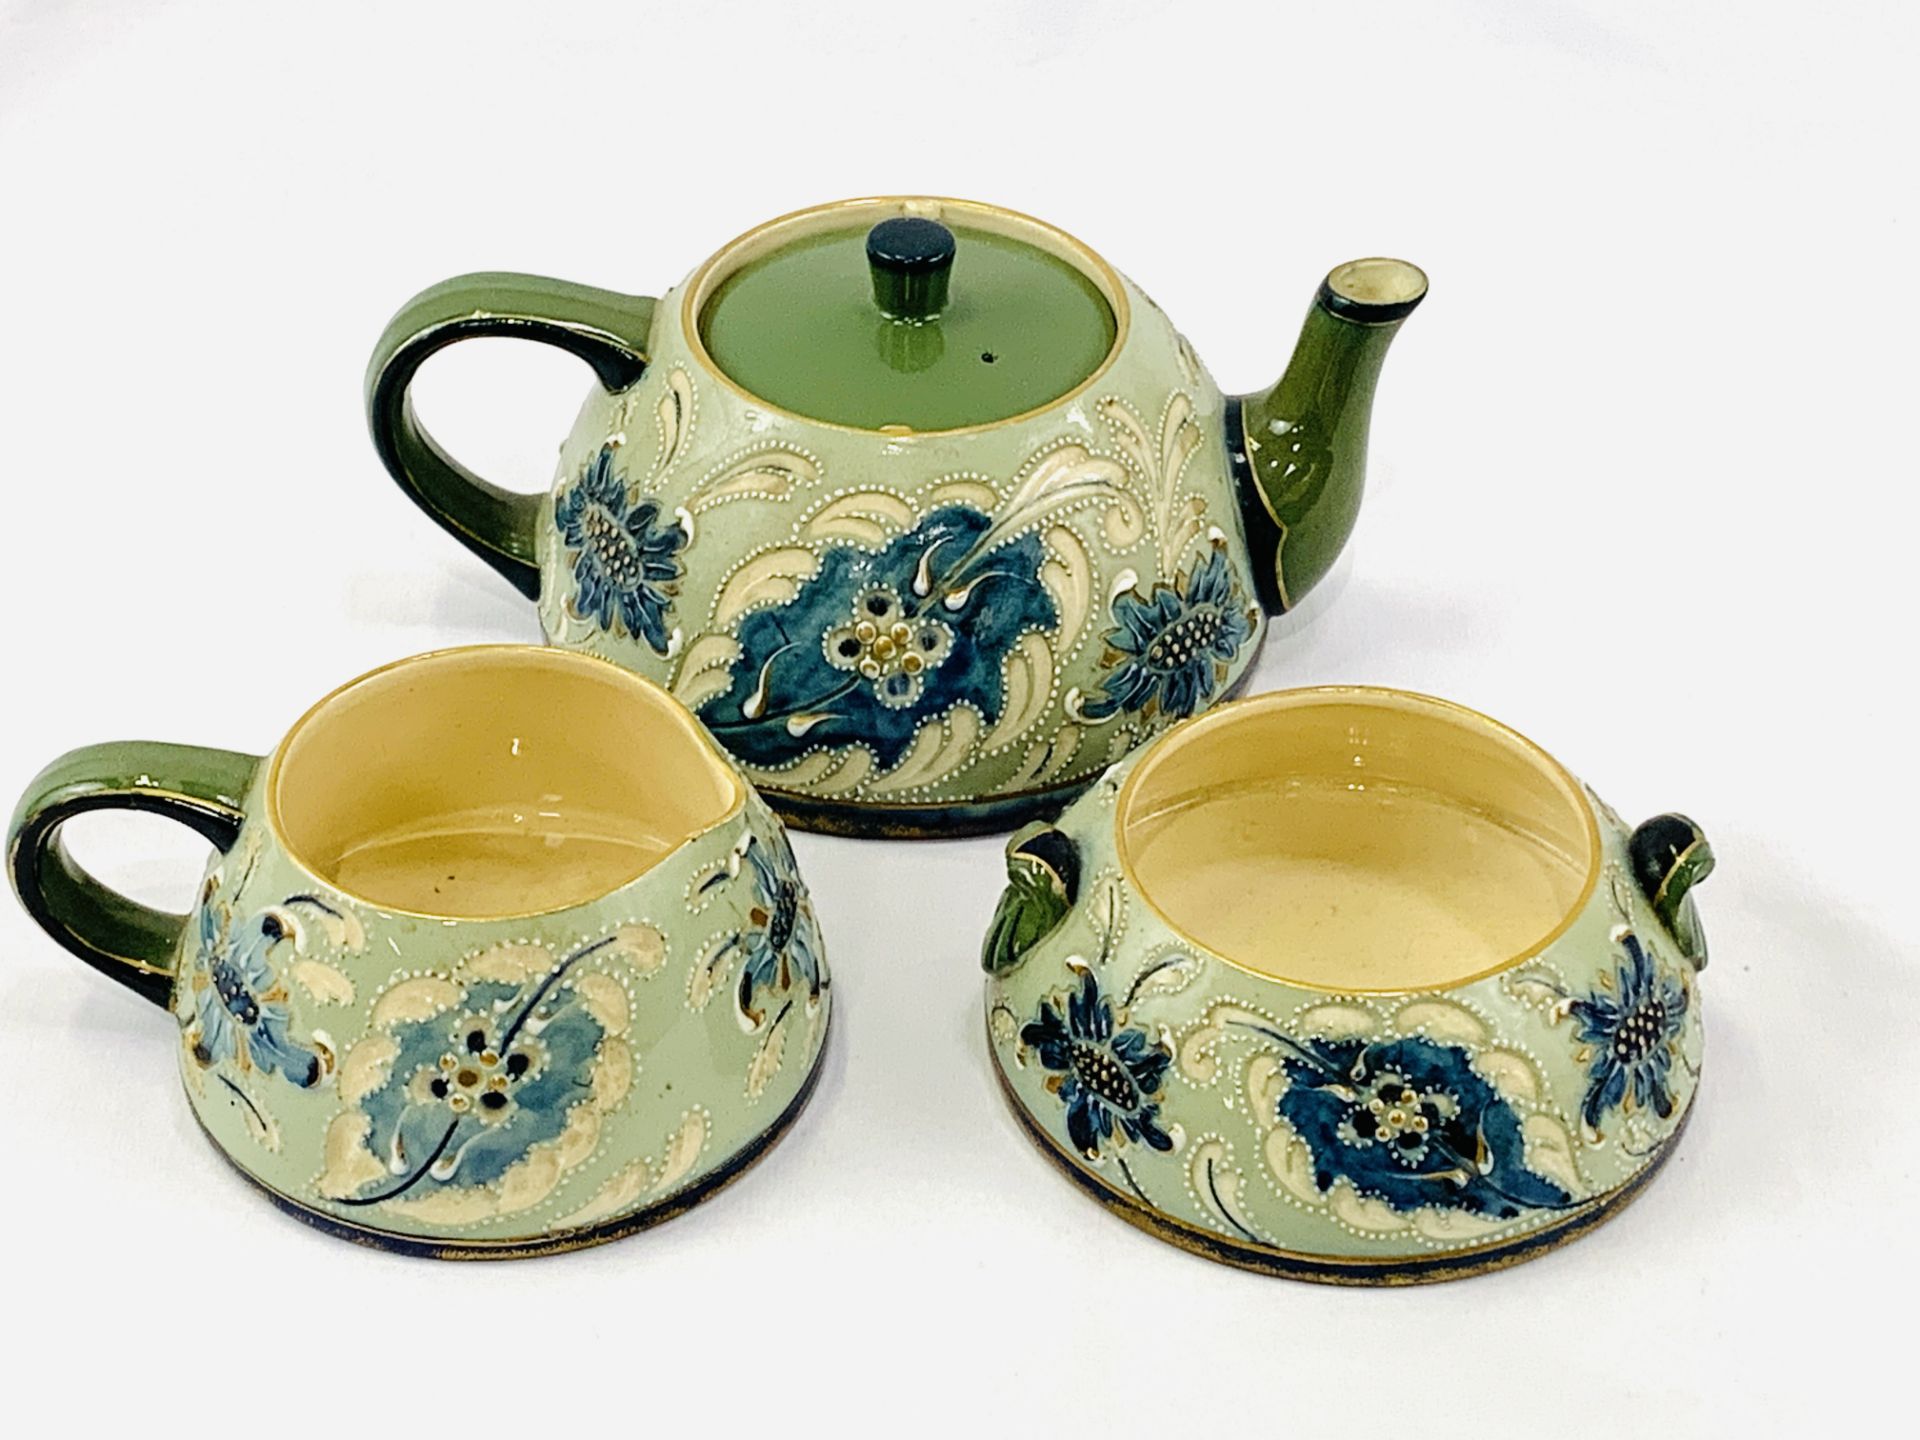 A James Macintyre & Co. batchelor's tea set